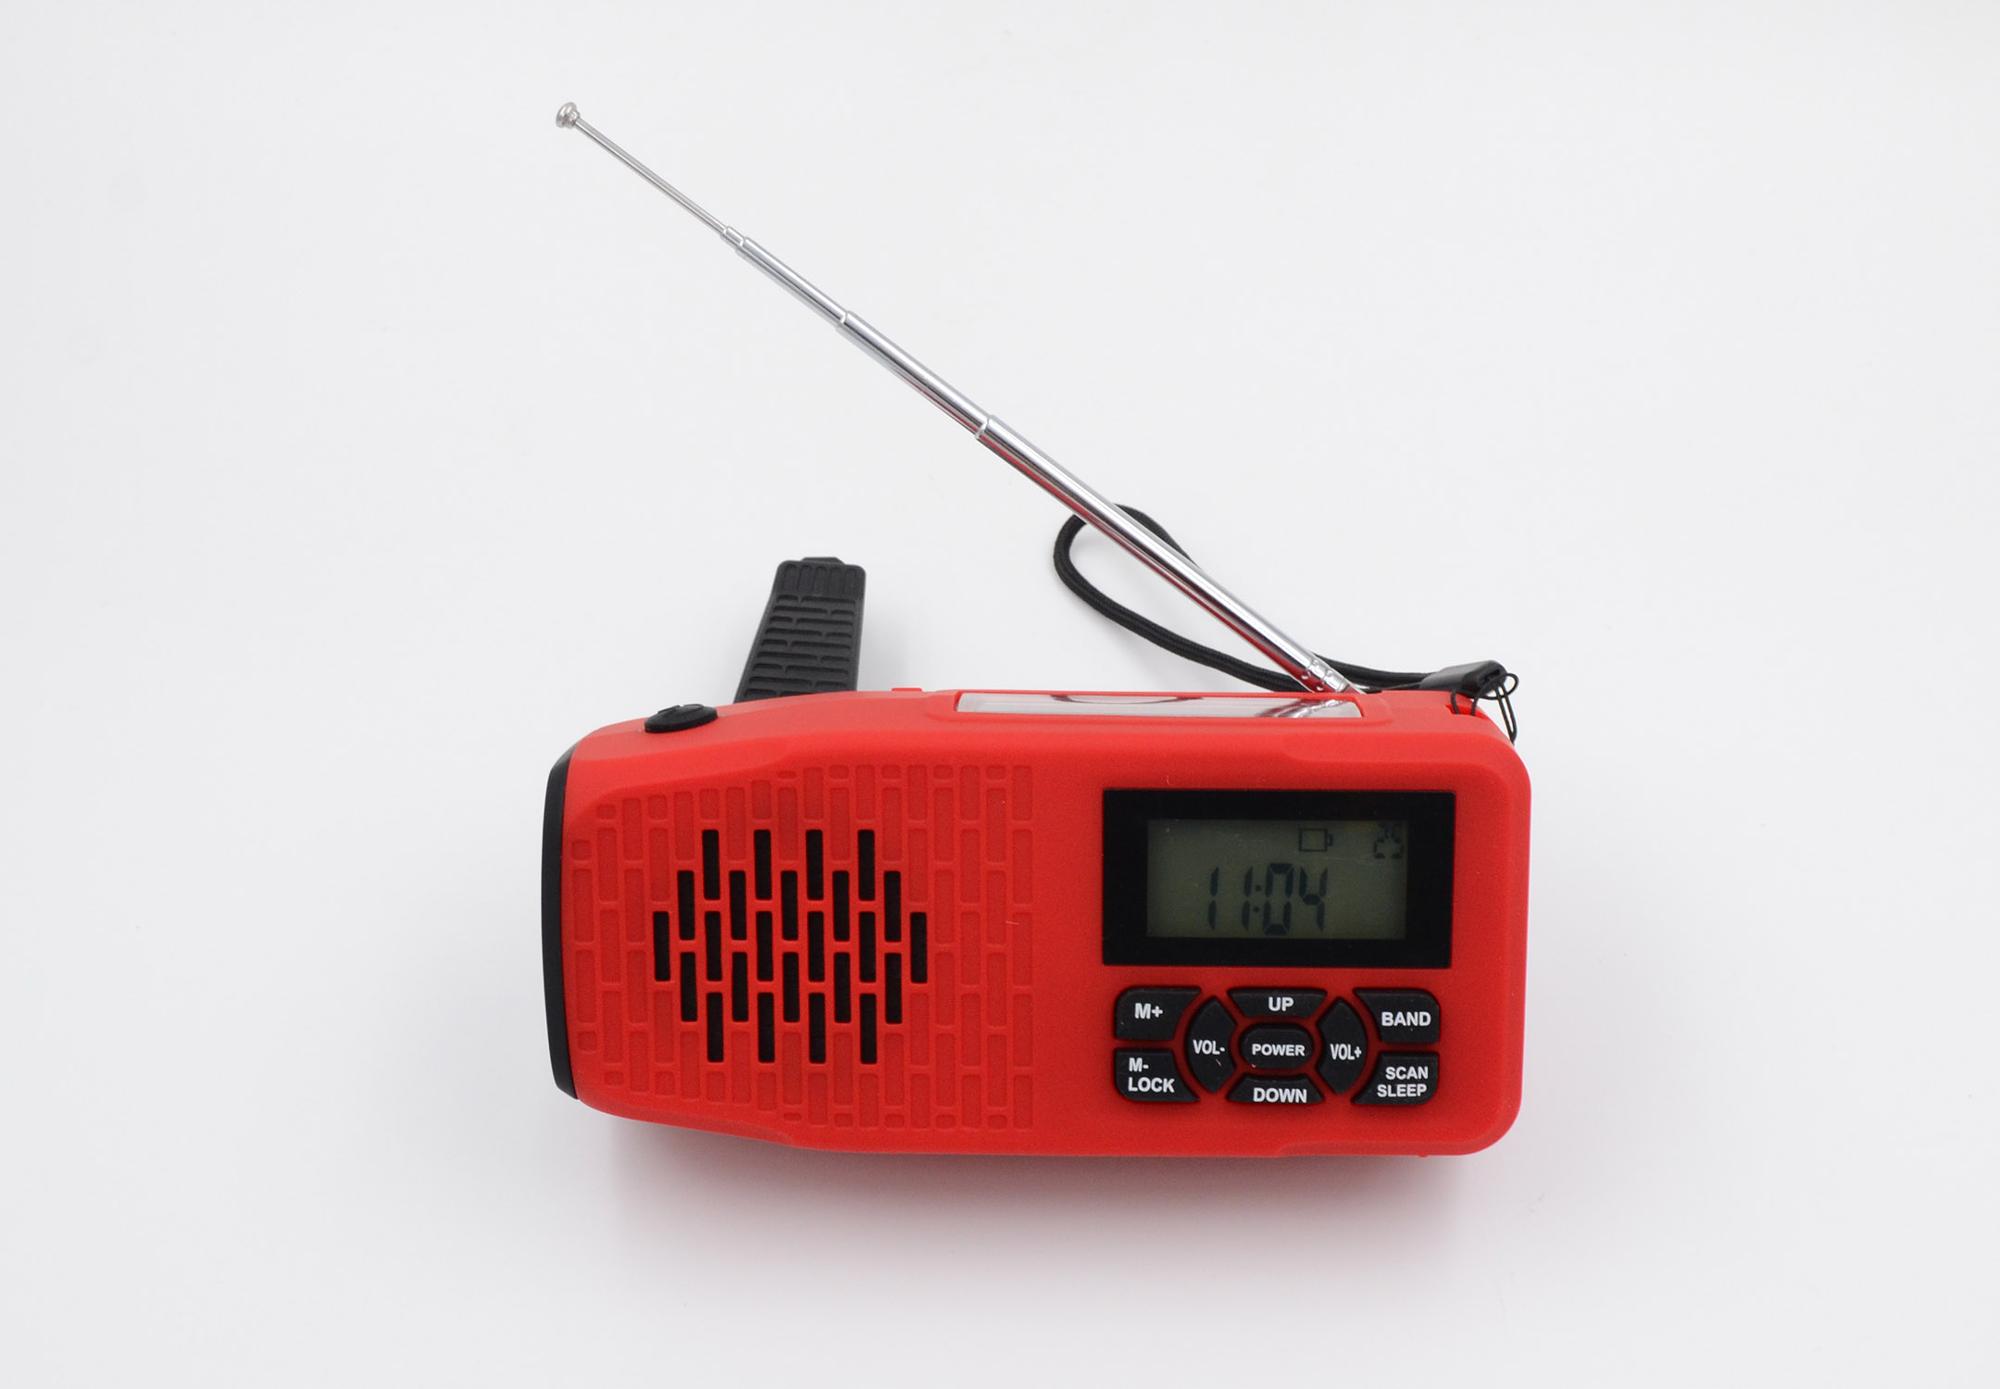 Emergency AM FM NOAA Portable Radio Self Powered Hand Crank Solar Weather Radio with LED Display Screen